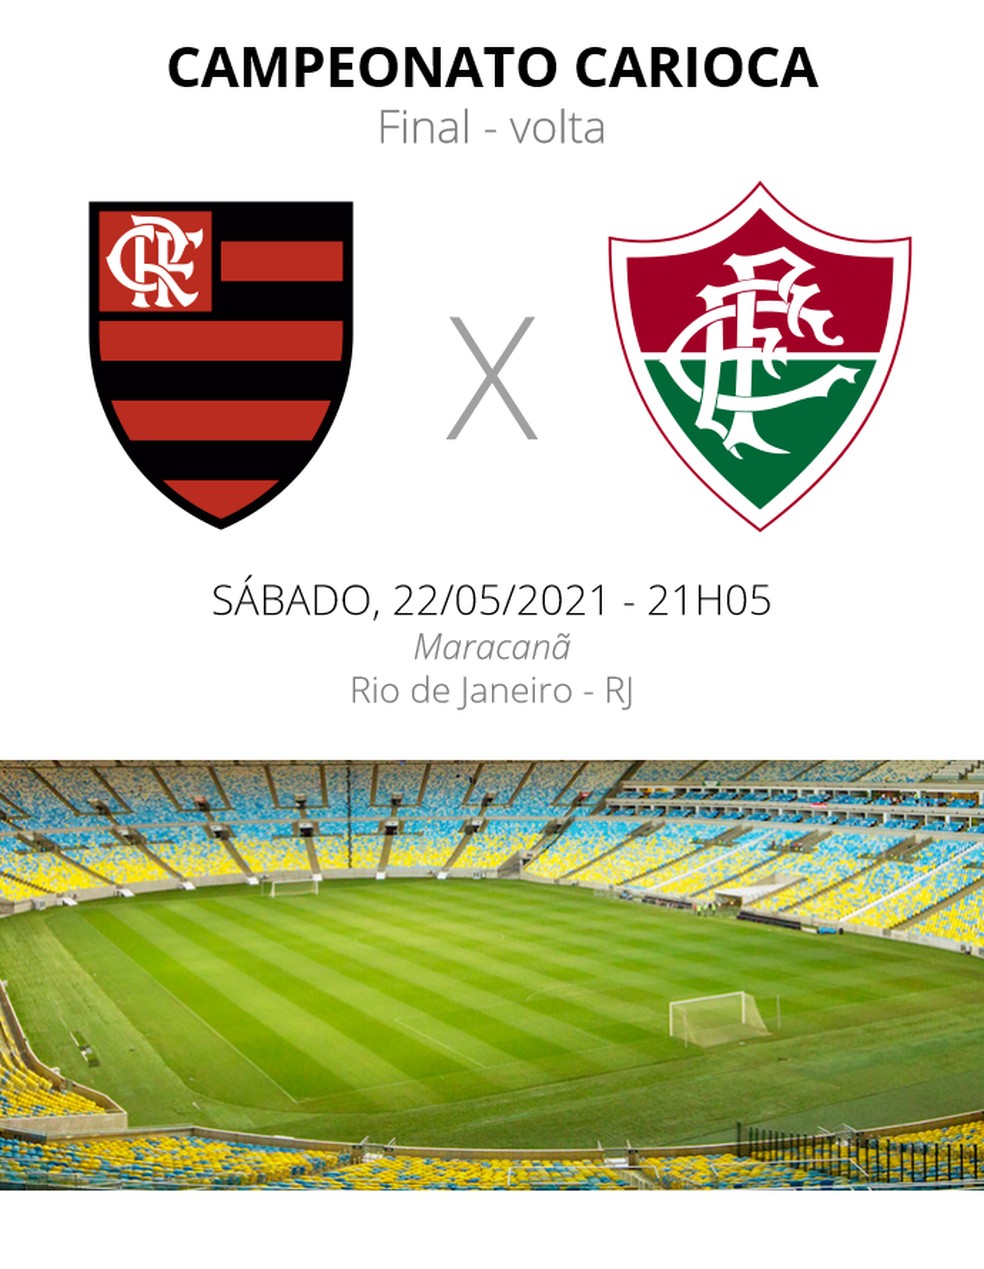 Campeonato Carioca - Final Jogo 2